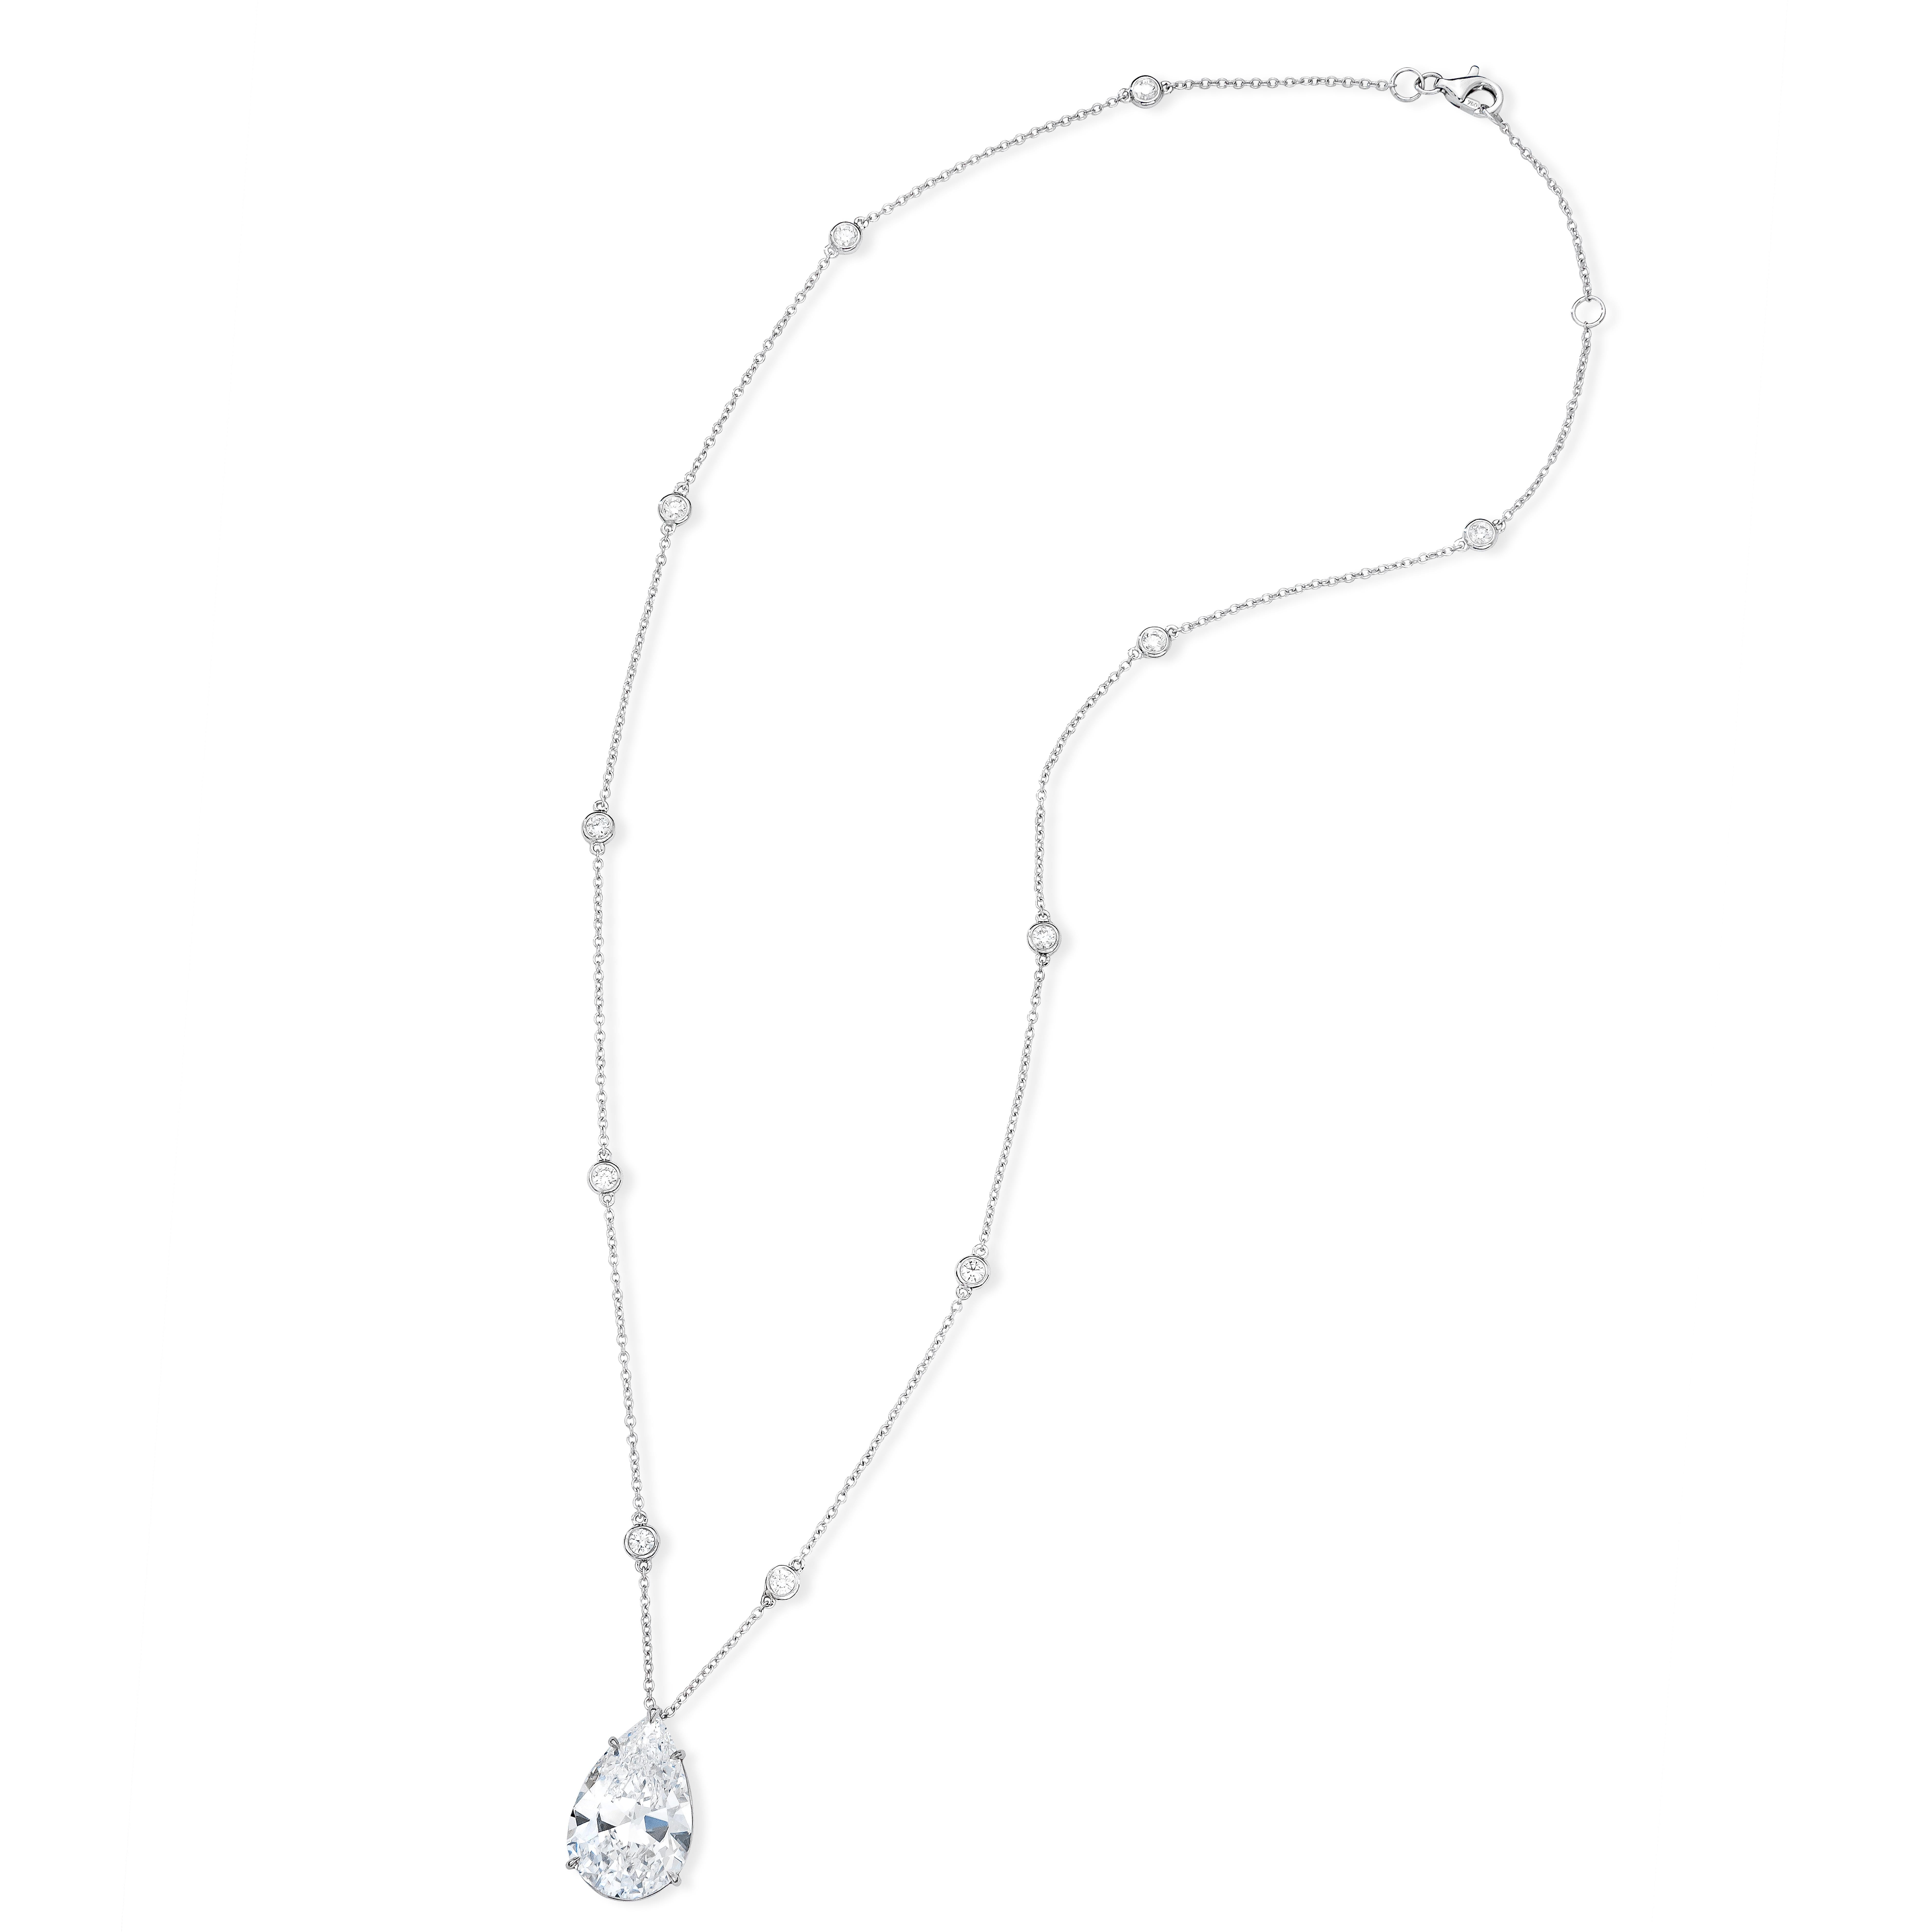 Pear Cut 12.12 Carat Pear-Shaped Diamond Pendant, GIA Certified, Type IIa For Sale